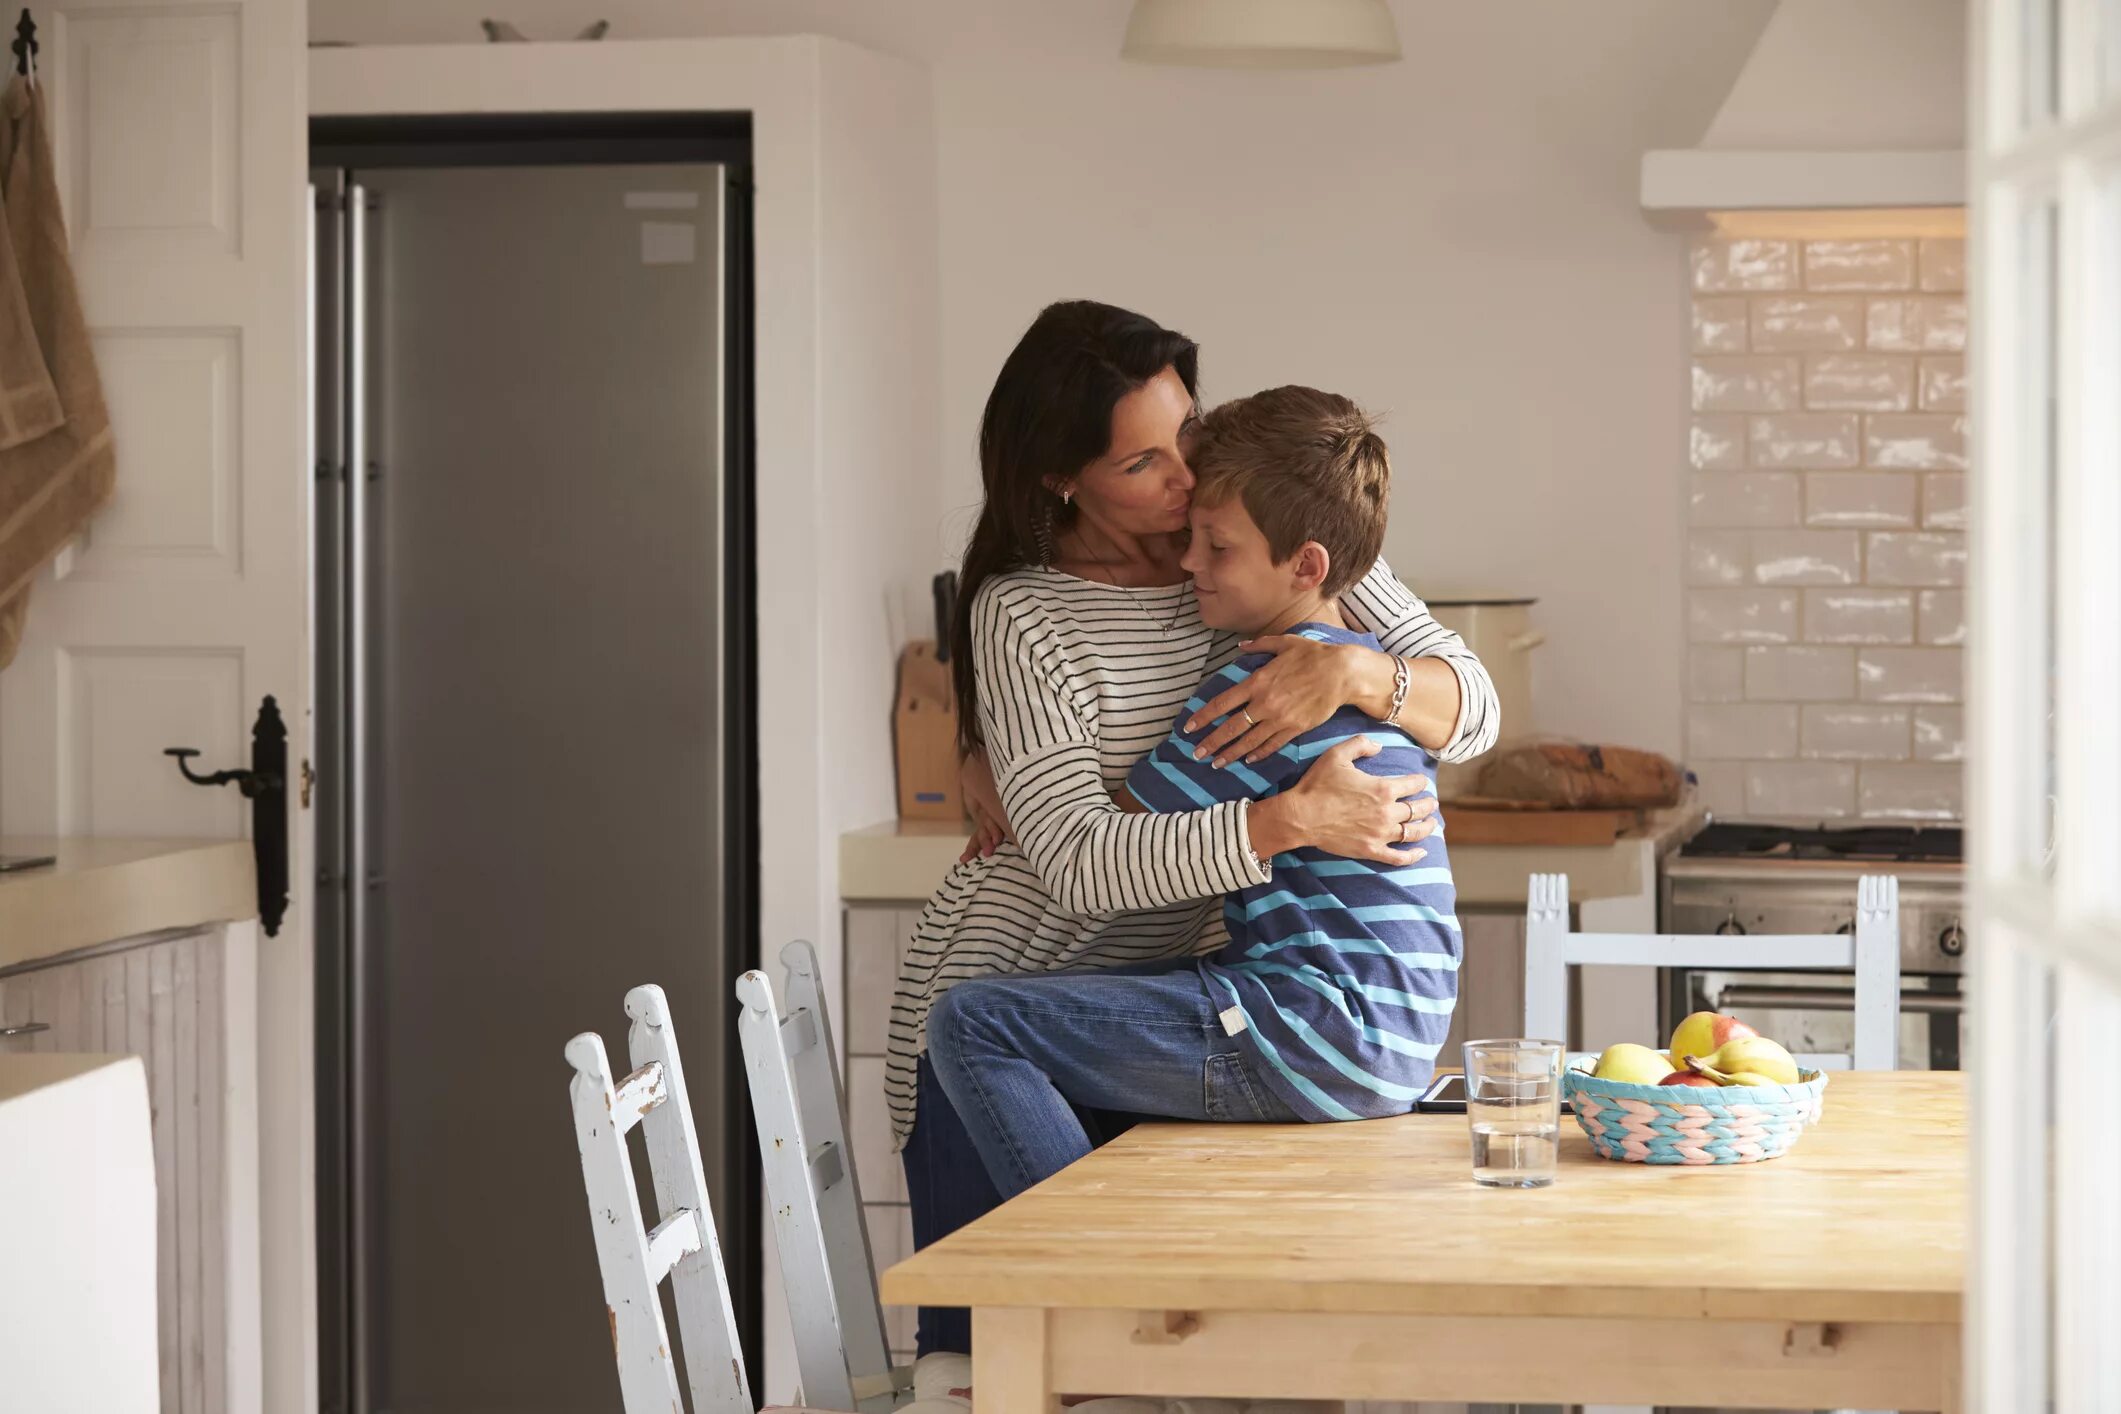 Mommy makes. Фотосессия мама с сыном на кухне. Сын и мать обнимаются на кухне. Мать со взрослым сыном на кухне. Мом son.